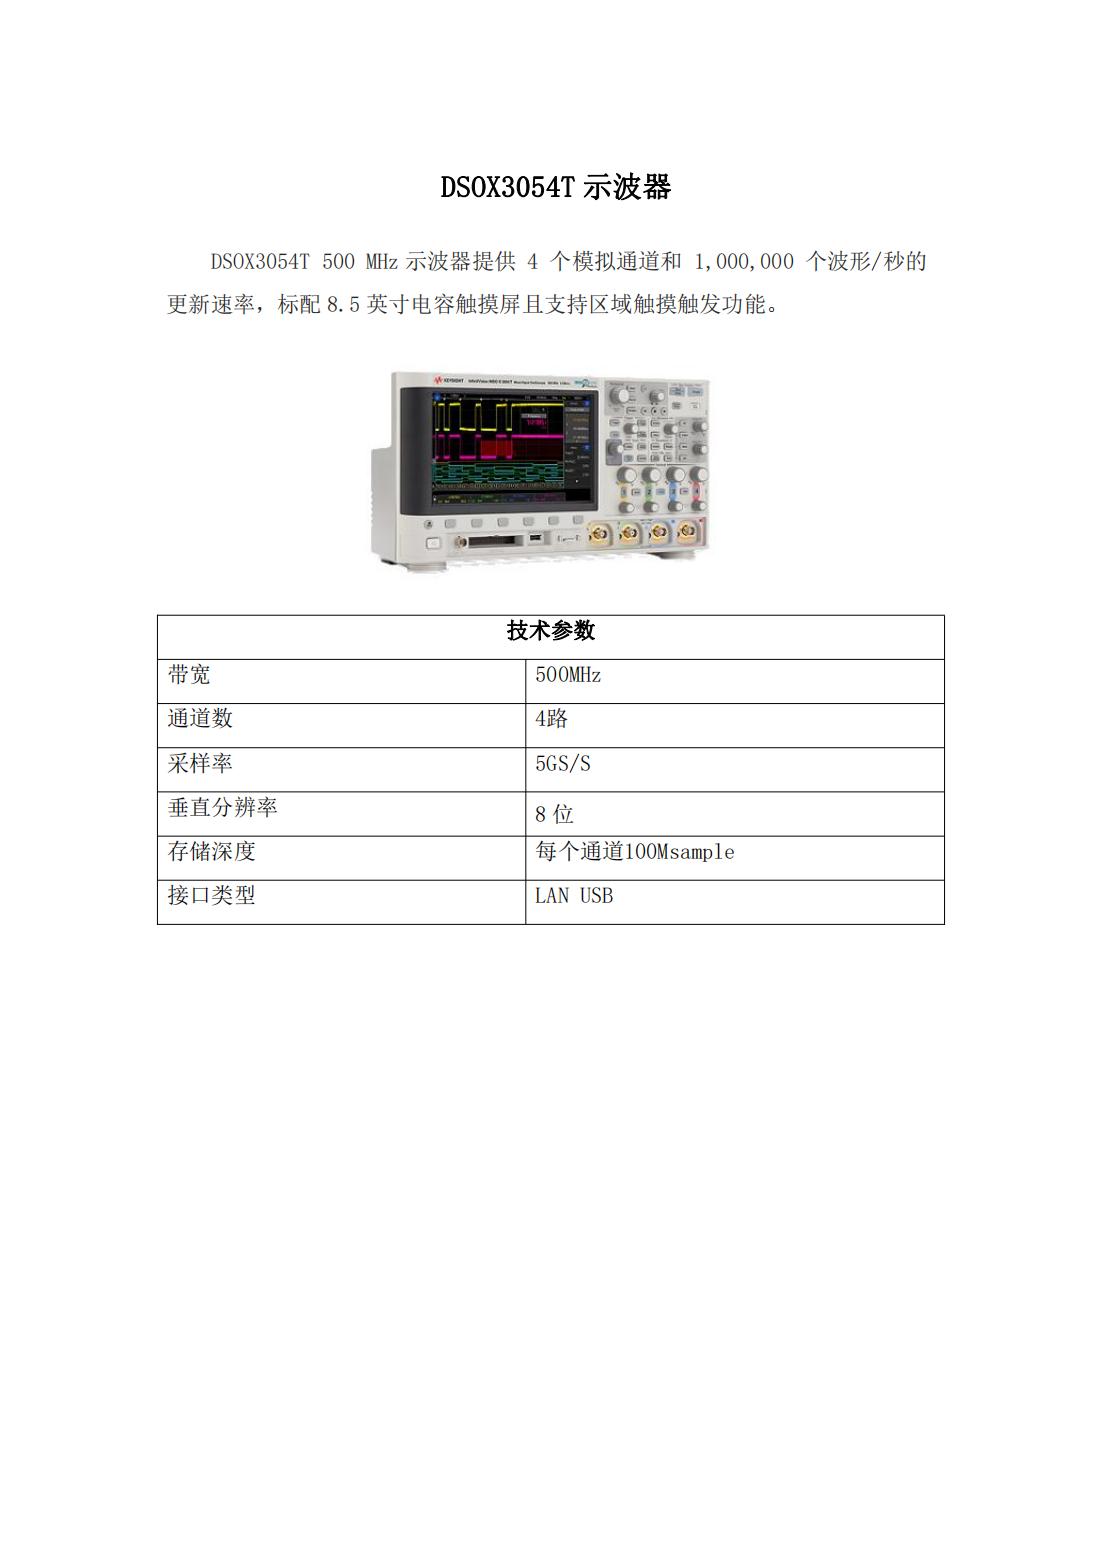 DSOX3054T示波器